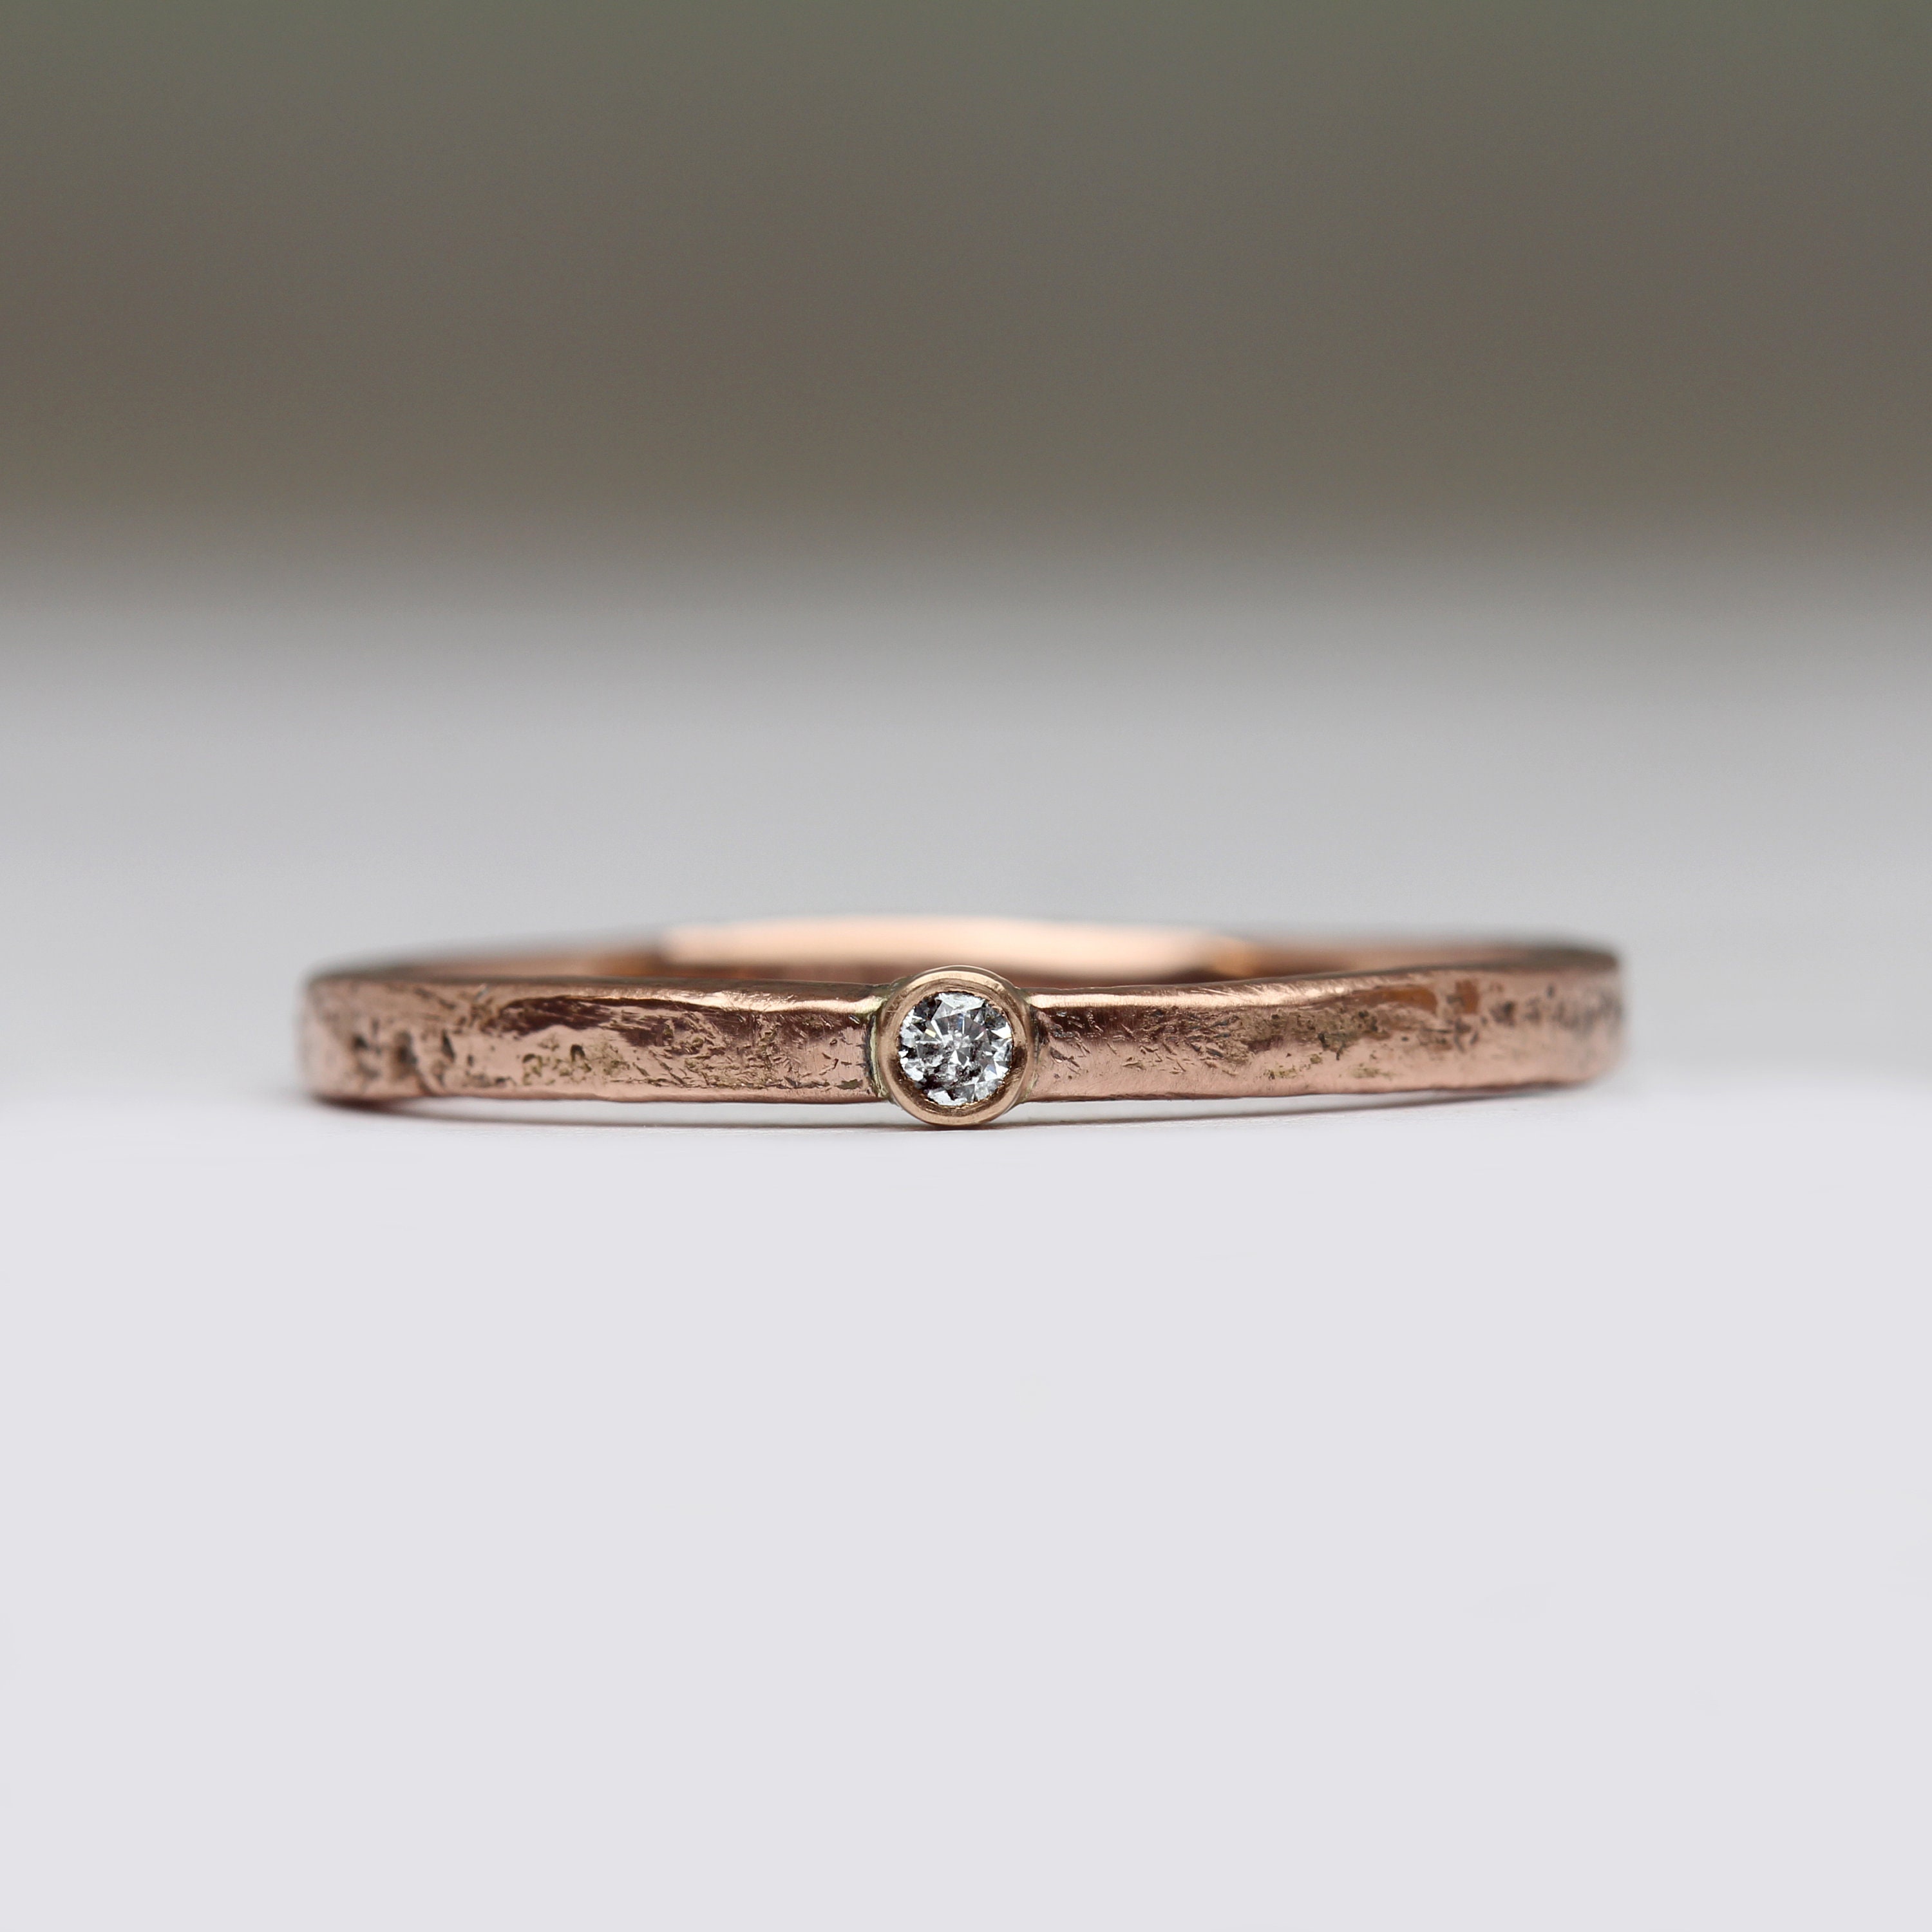 Rose Gold Diamond Ring - Promise Cast in Beach Sand Ethical Canada Mark Diamond- Gift For Her Or Him Handmade Cornwall